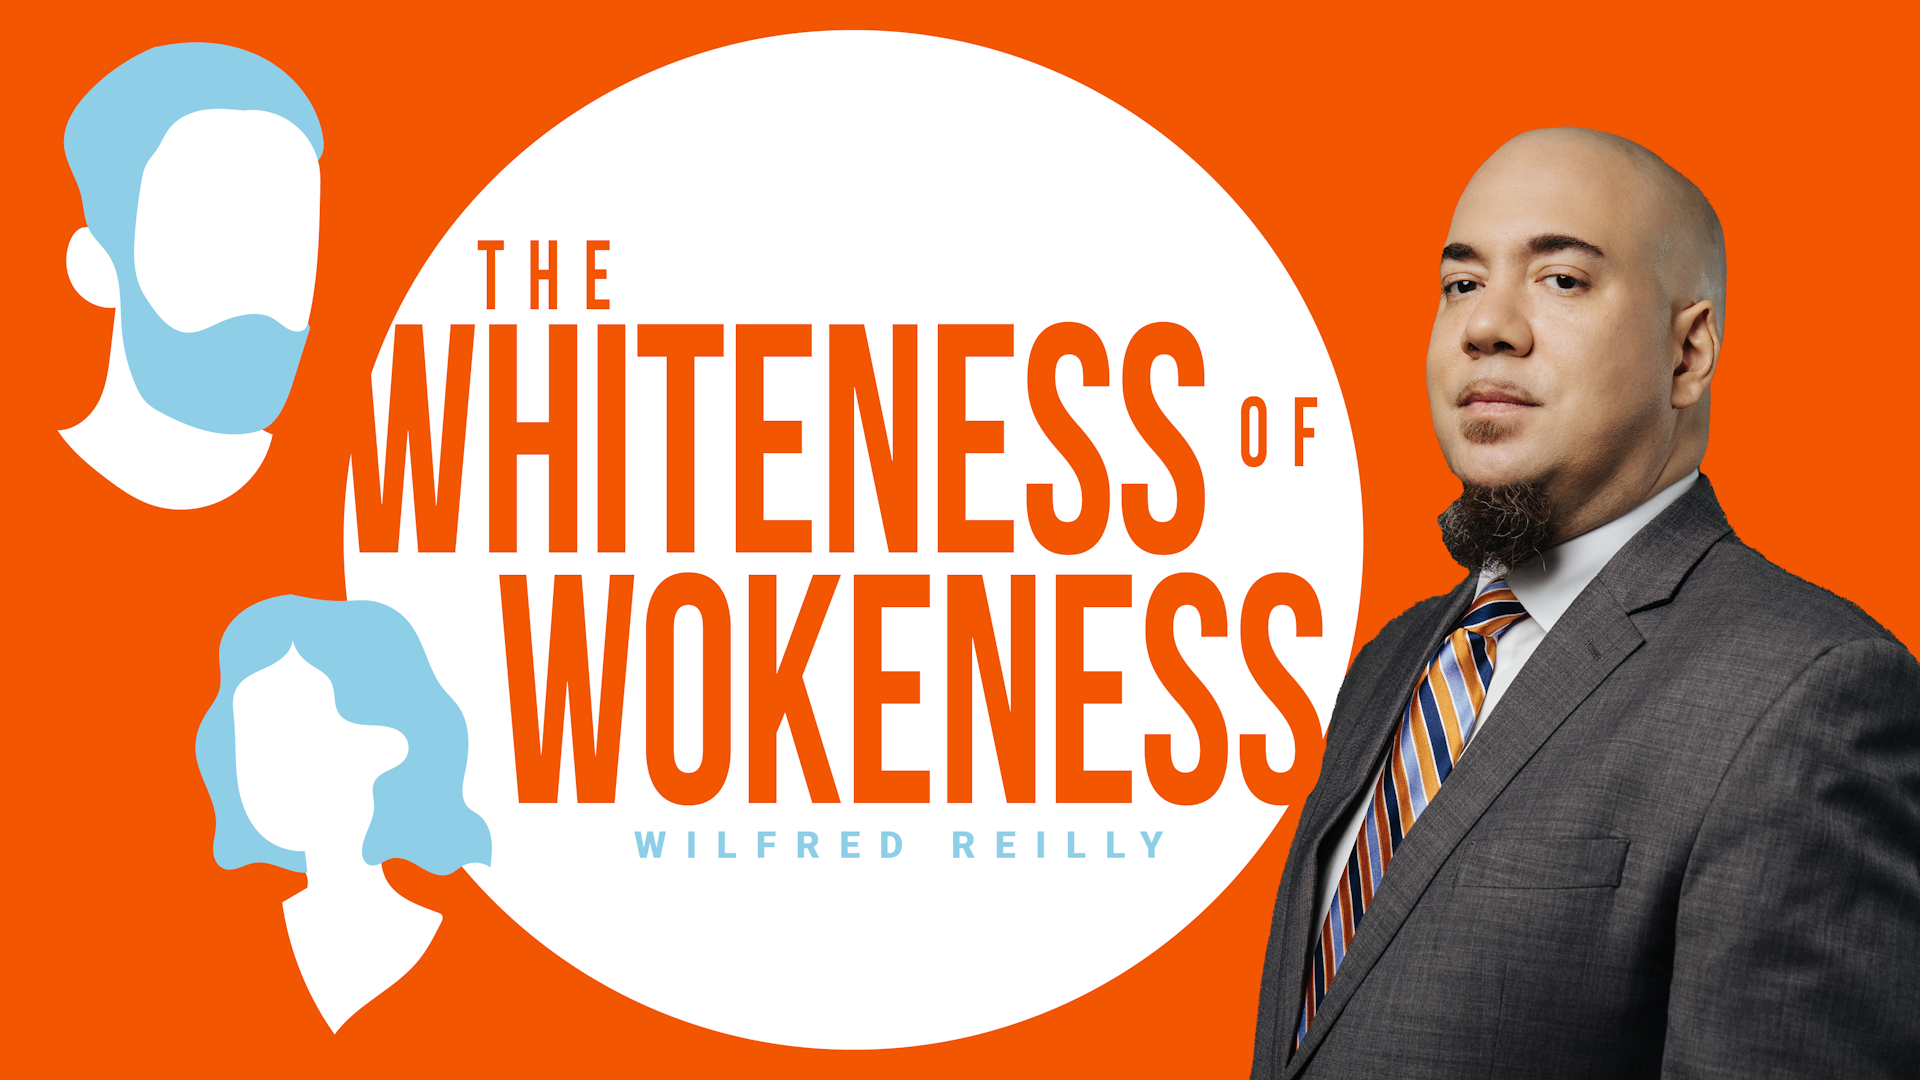 The Whiteness of Wokeness